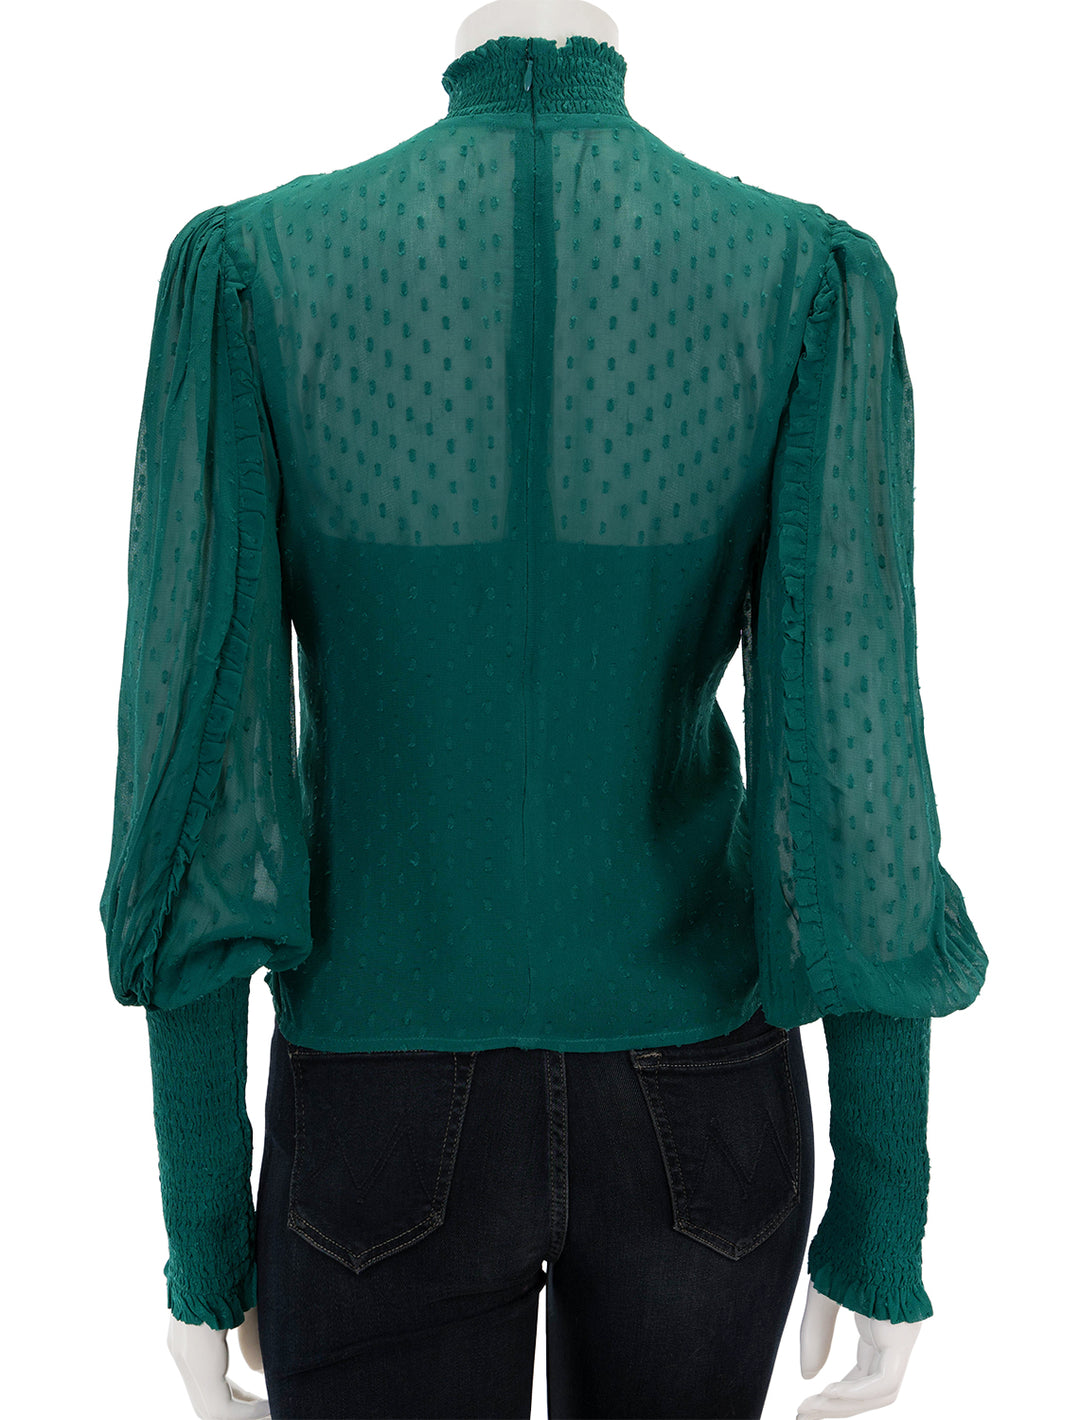 Back view of FARM Rio's emerald ruffled blouse.